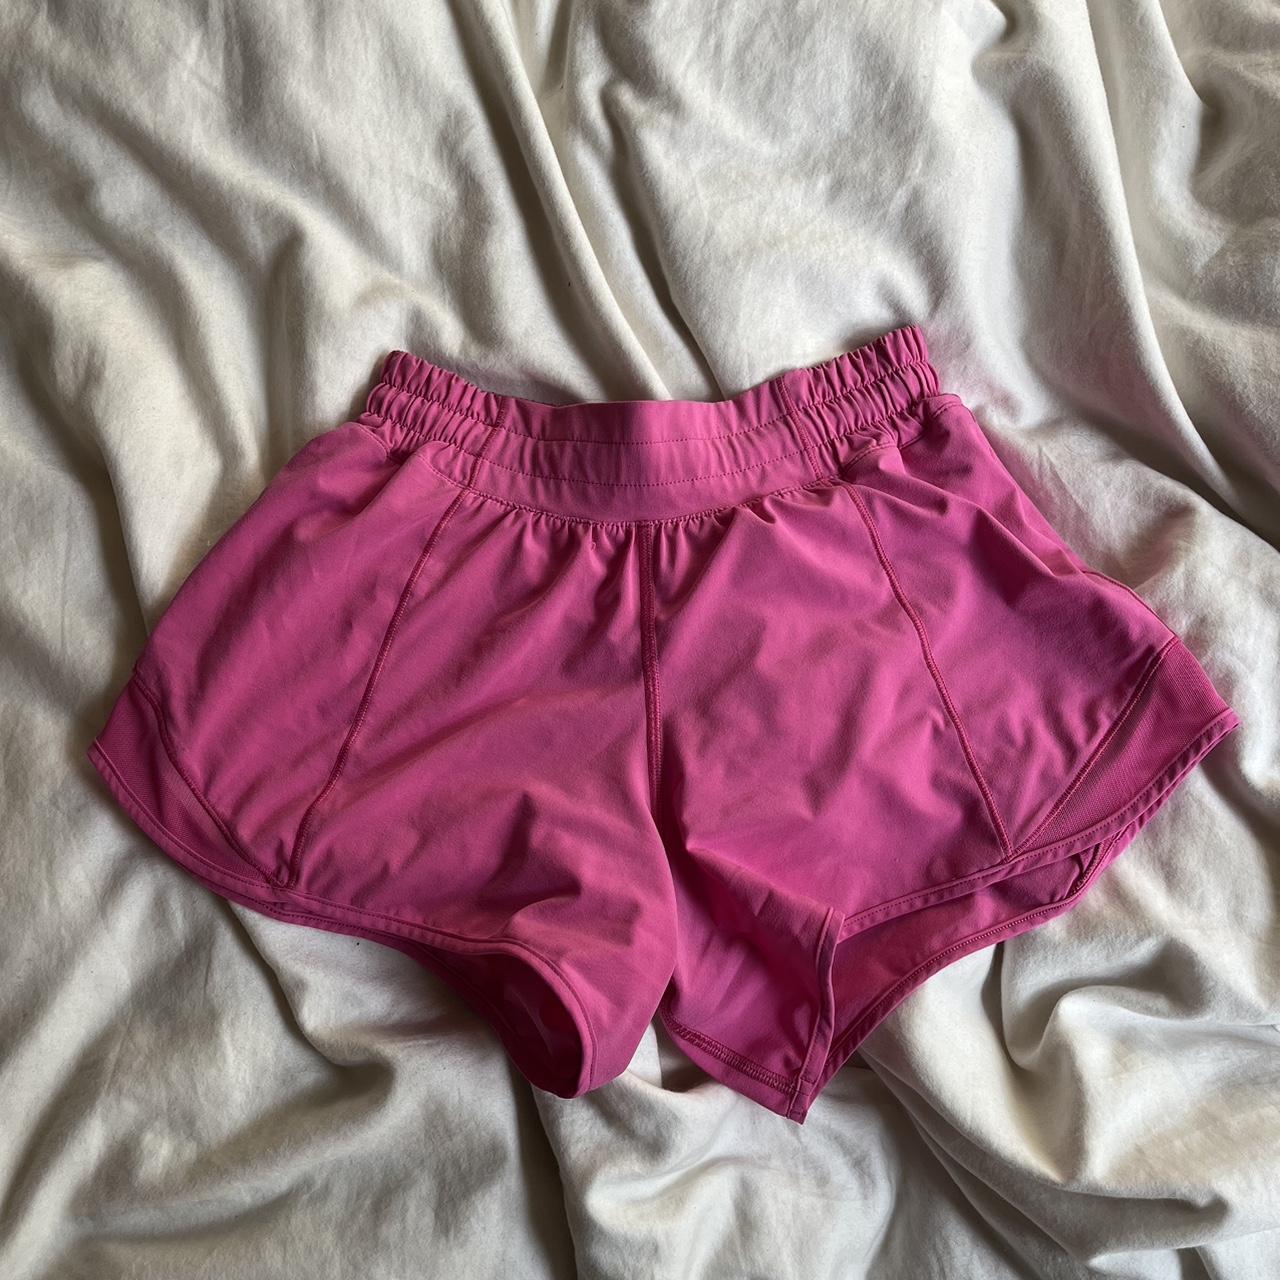 The cutest sonic pink  lululemon shorts for summer! 🔗 under “IN, Lululemon